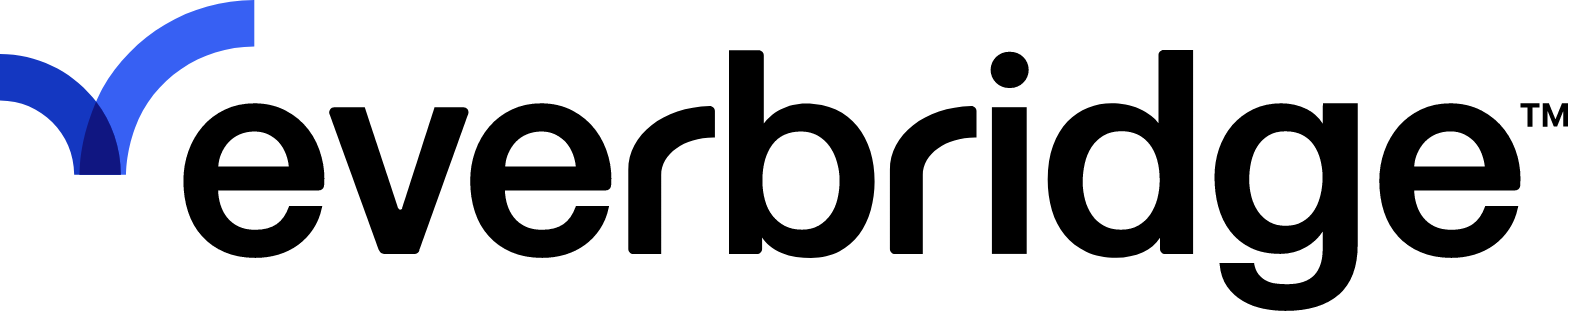 Everbridge logo large (transparent PNG)